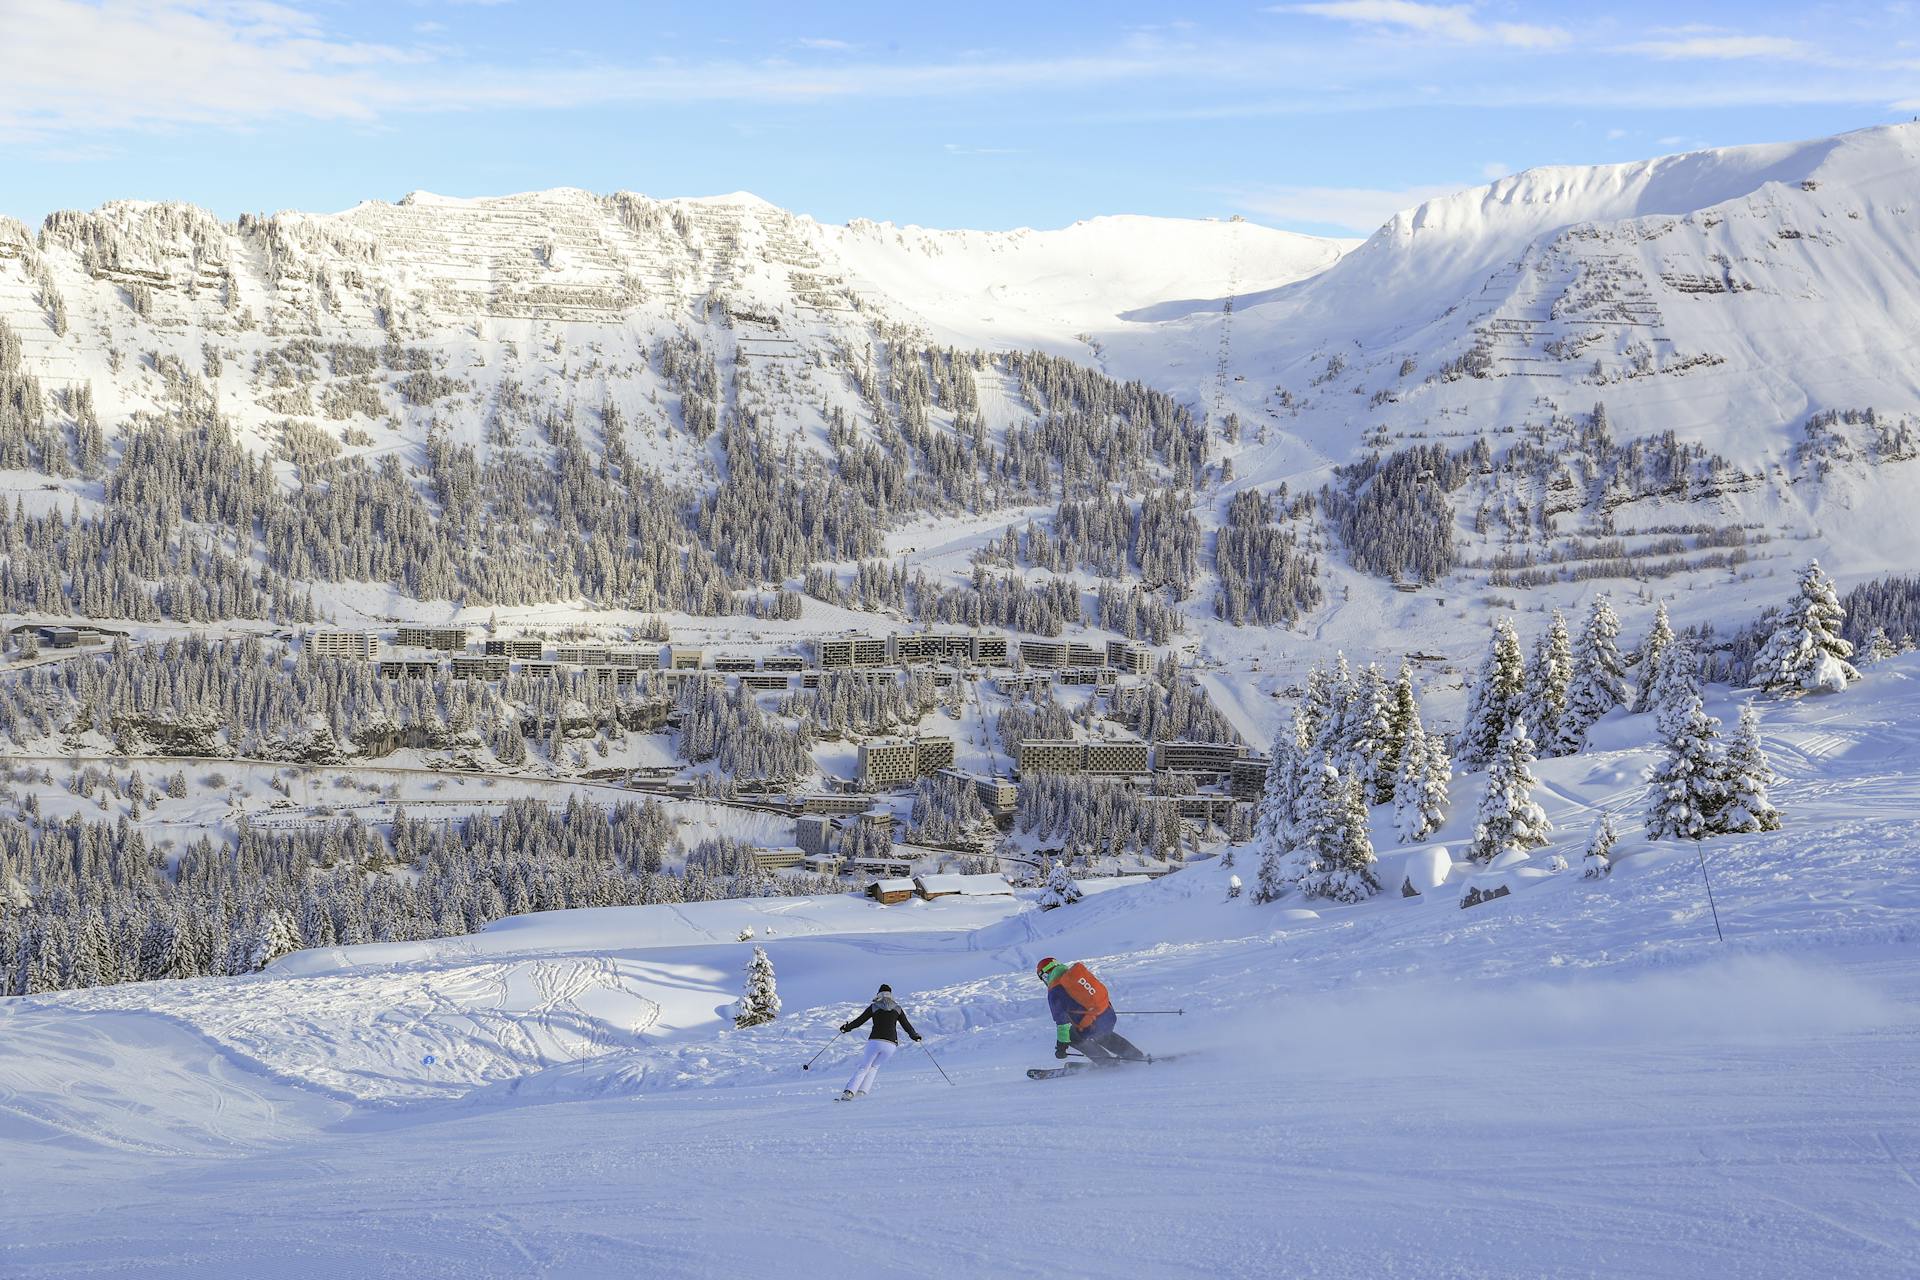 Skiiers skiing down slope into Flaine ski resort on bluebird day